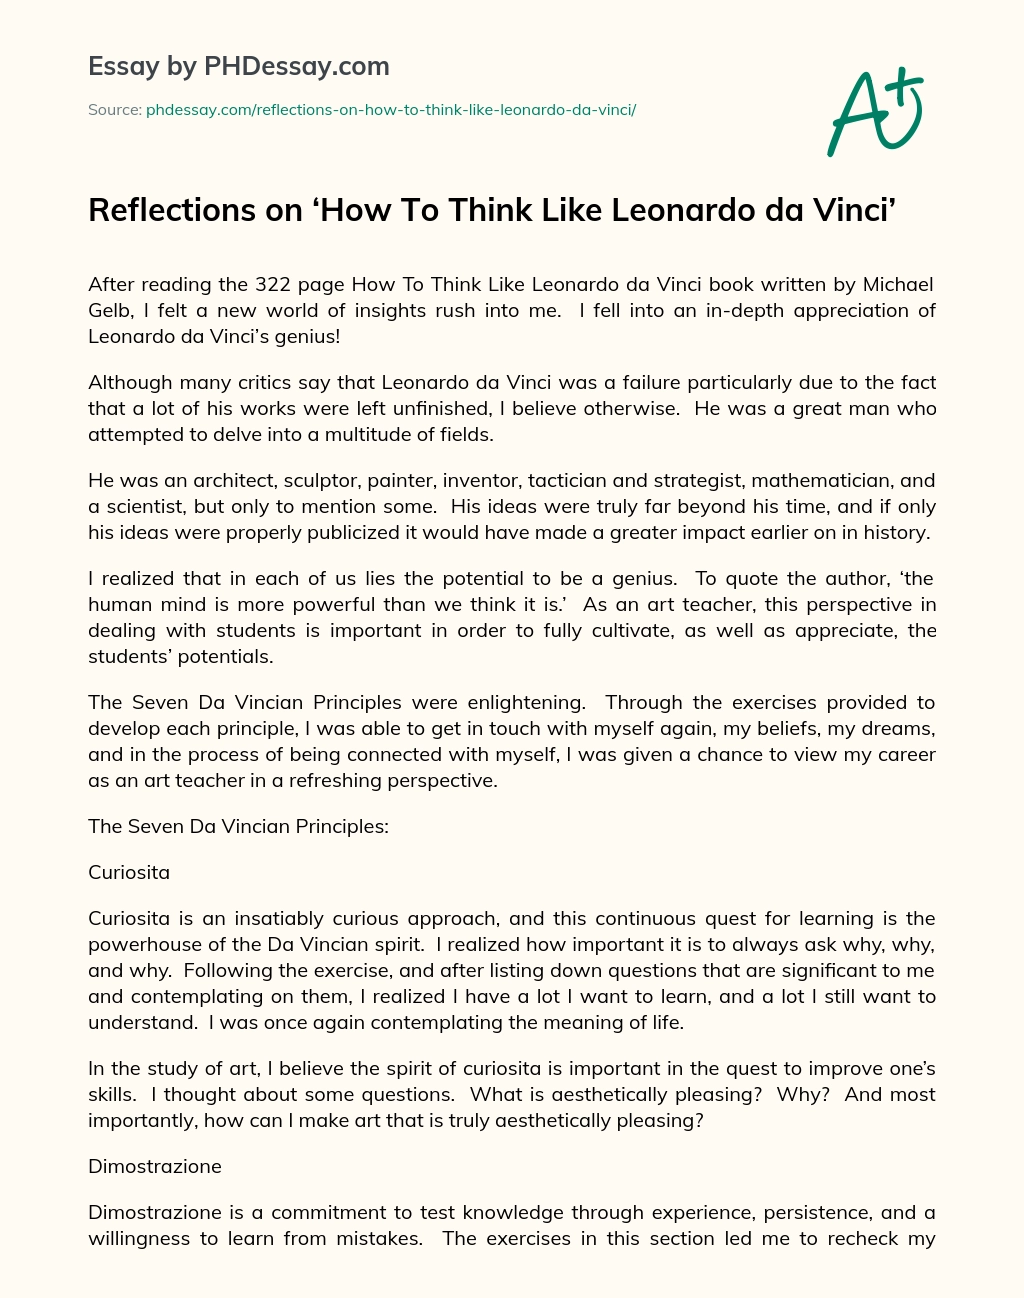 Reflections on ‘How To Think Like Leonardo da Vinci’ essay